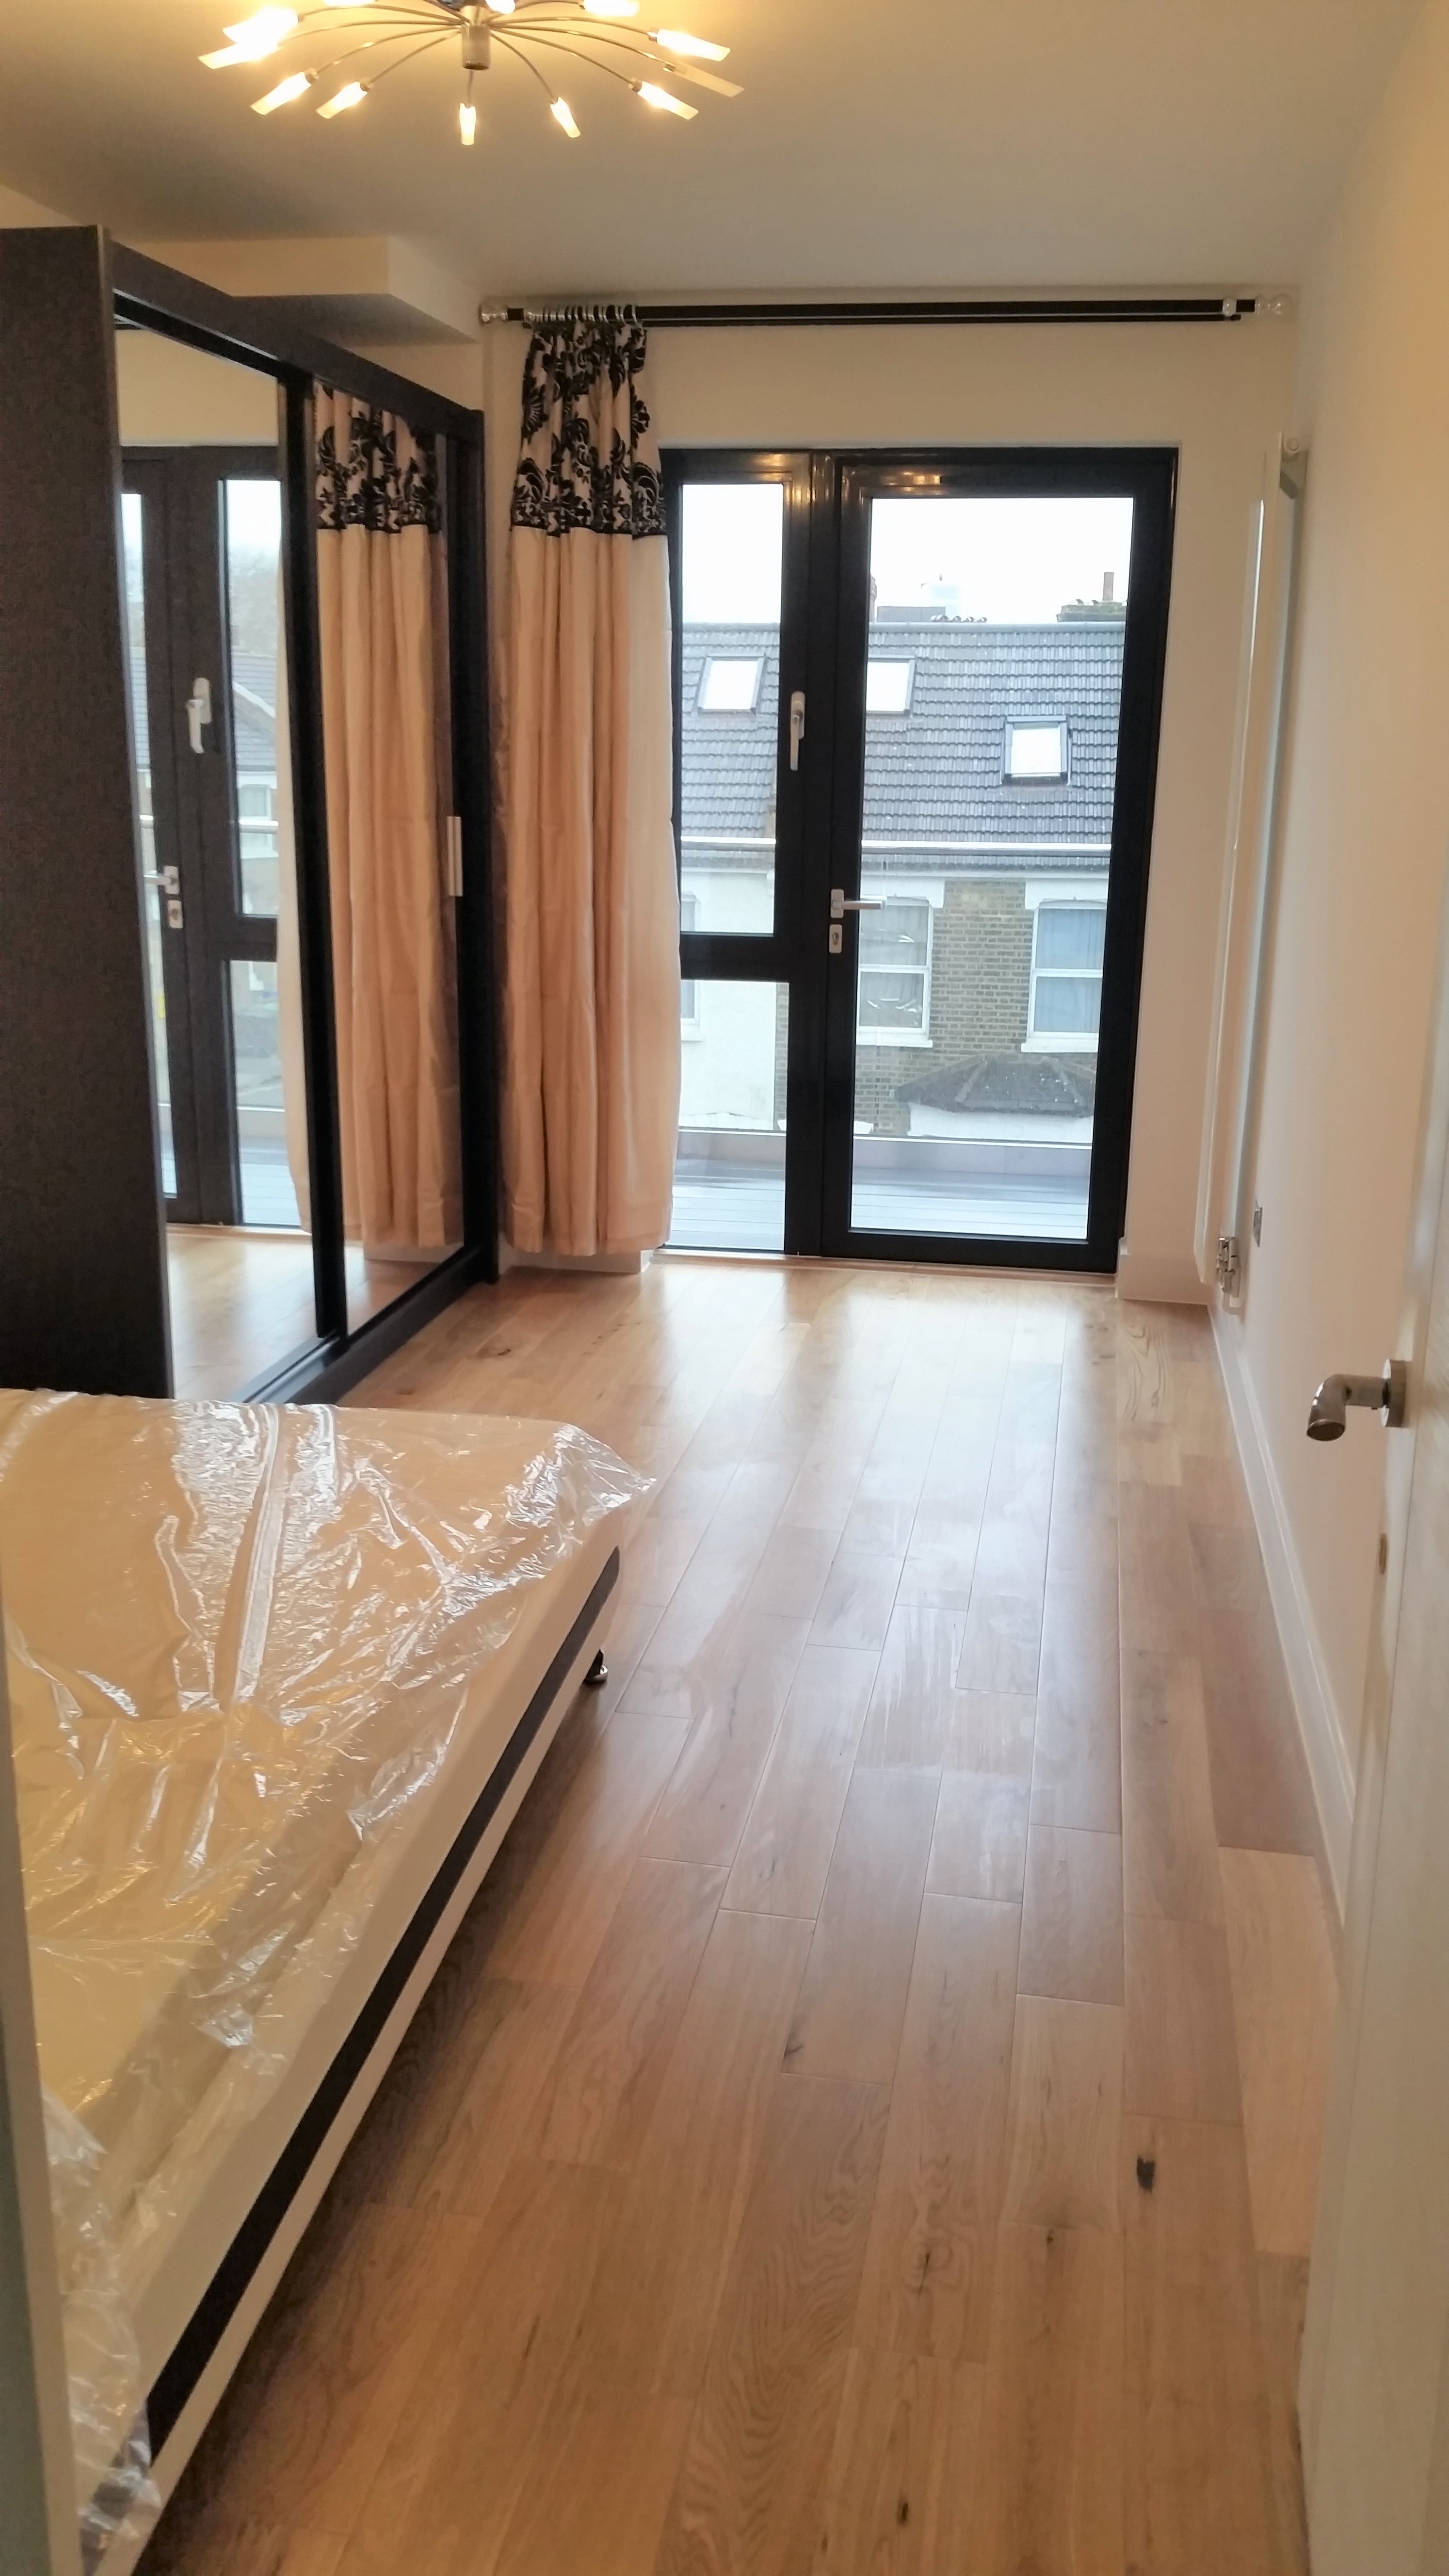 1 bed Flat for rent in Deptford. From Property MJ Ltd - London